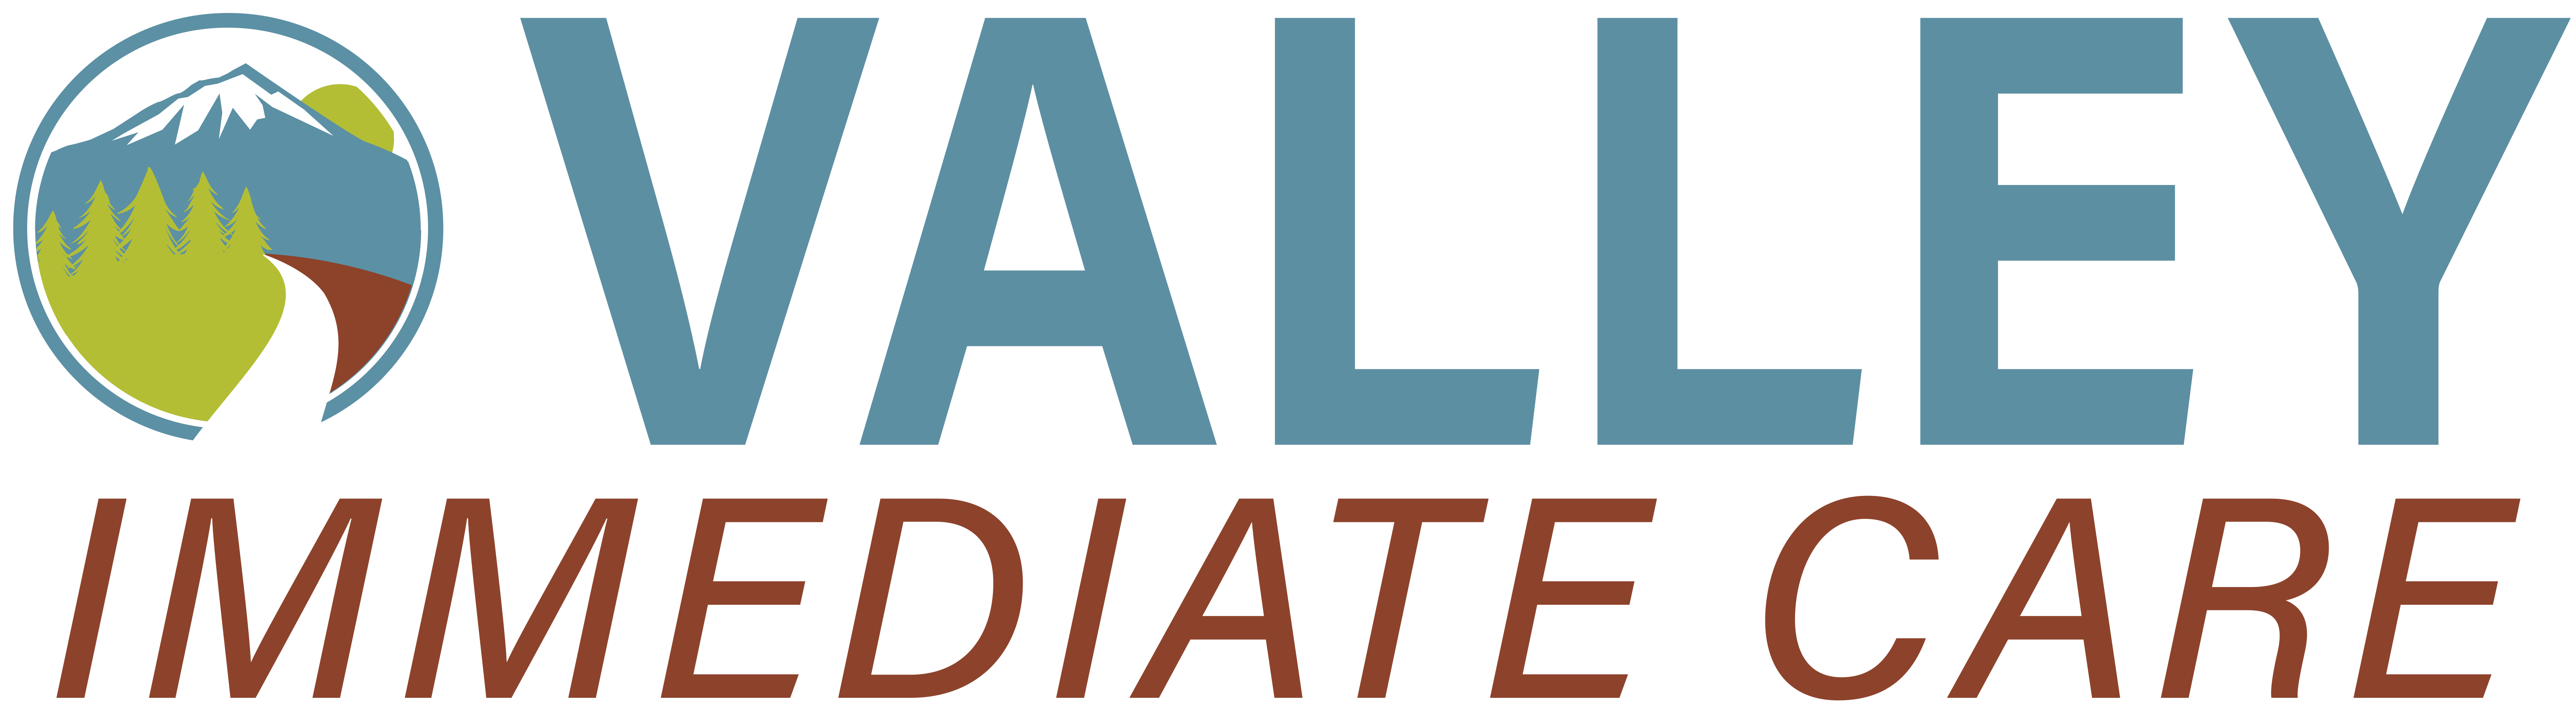 Valley Immediate Care Logo